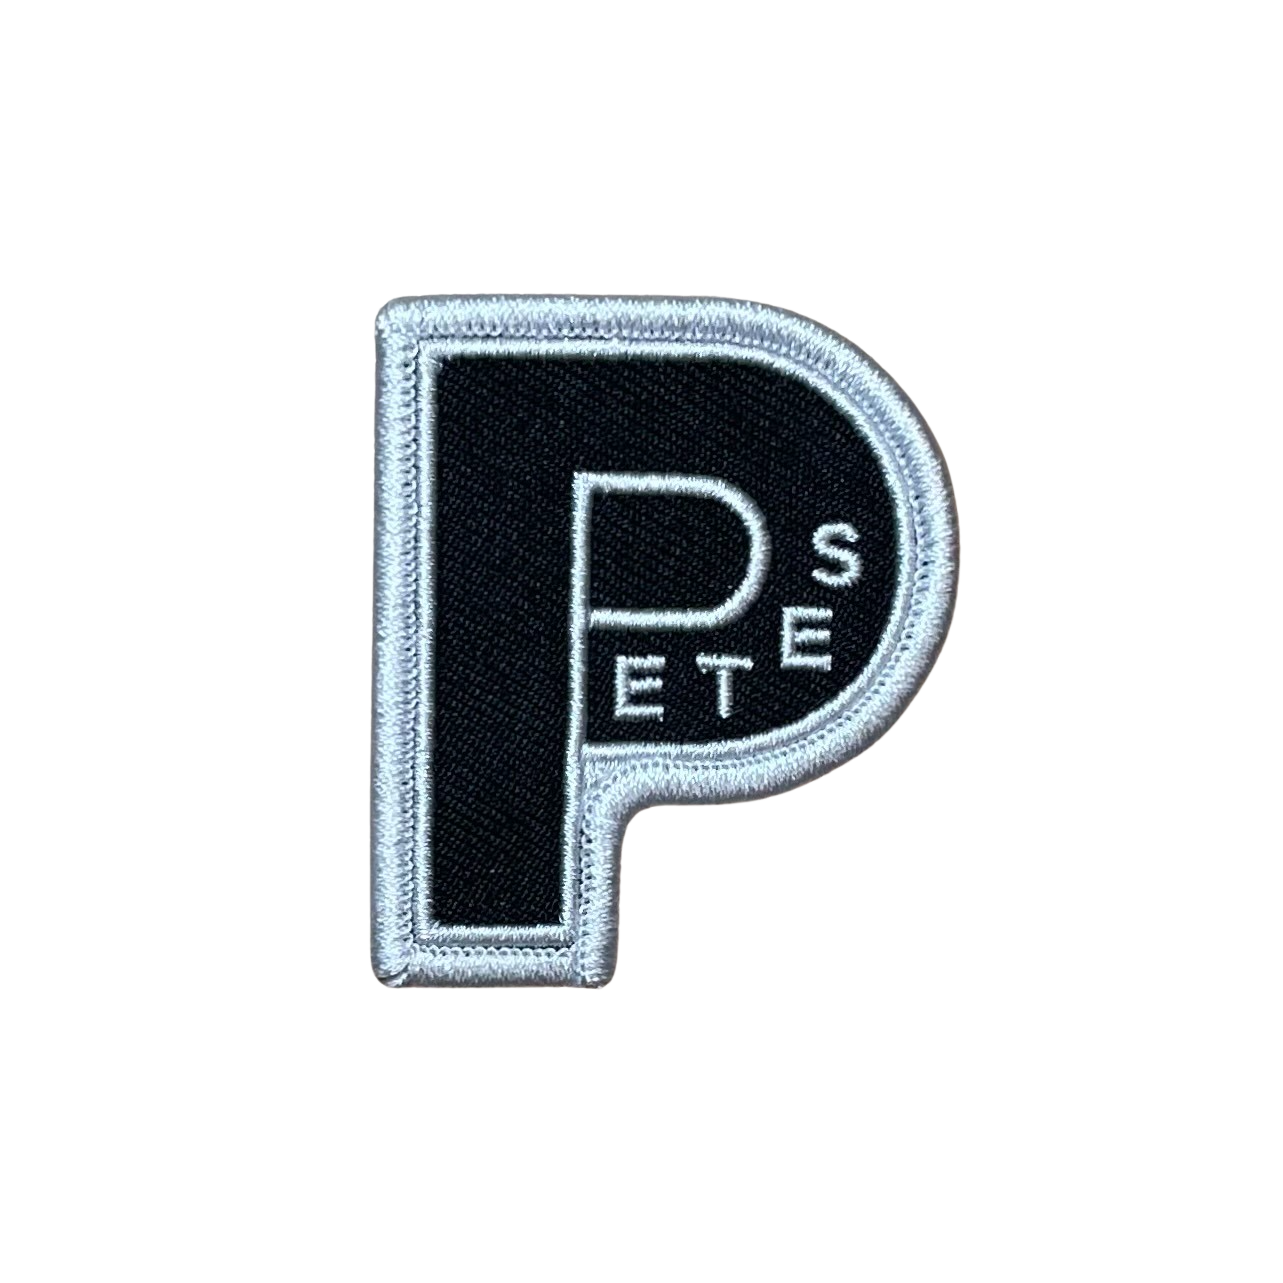 PTBO - Petes Patch